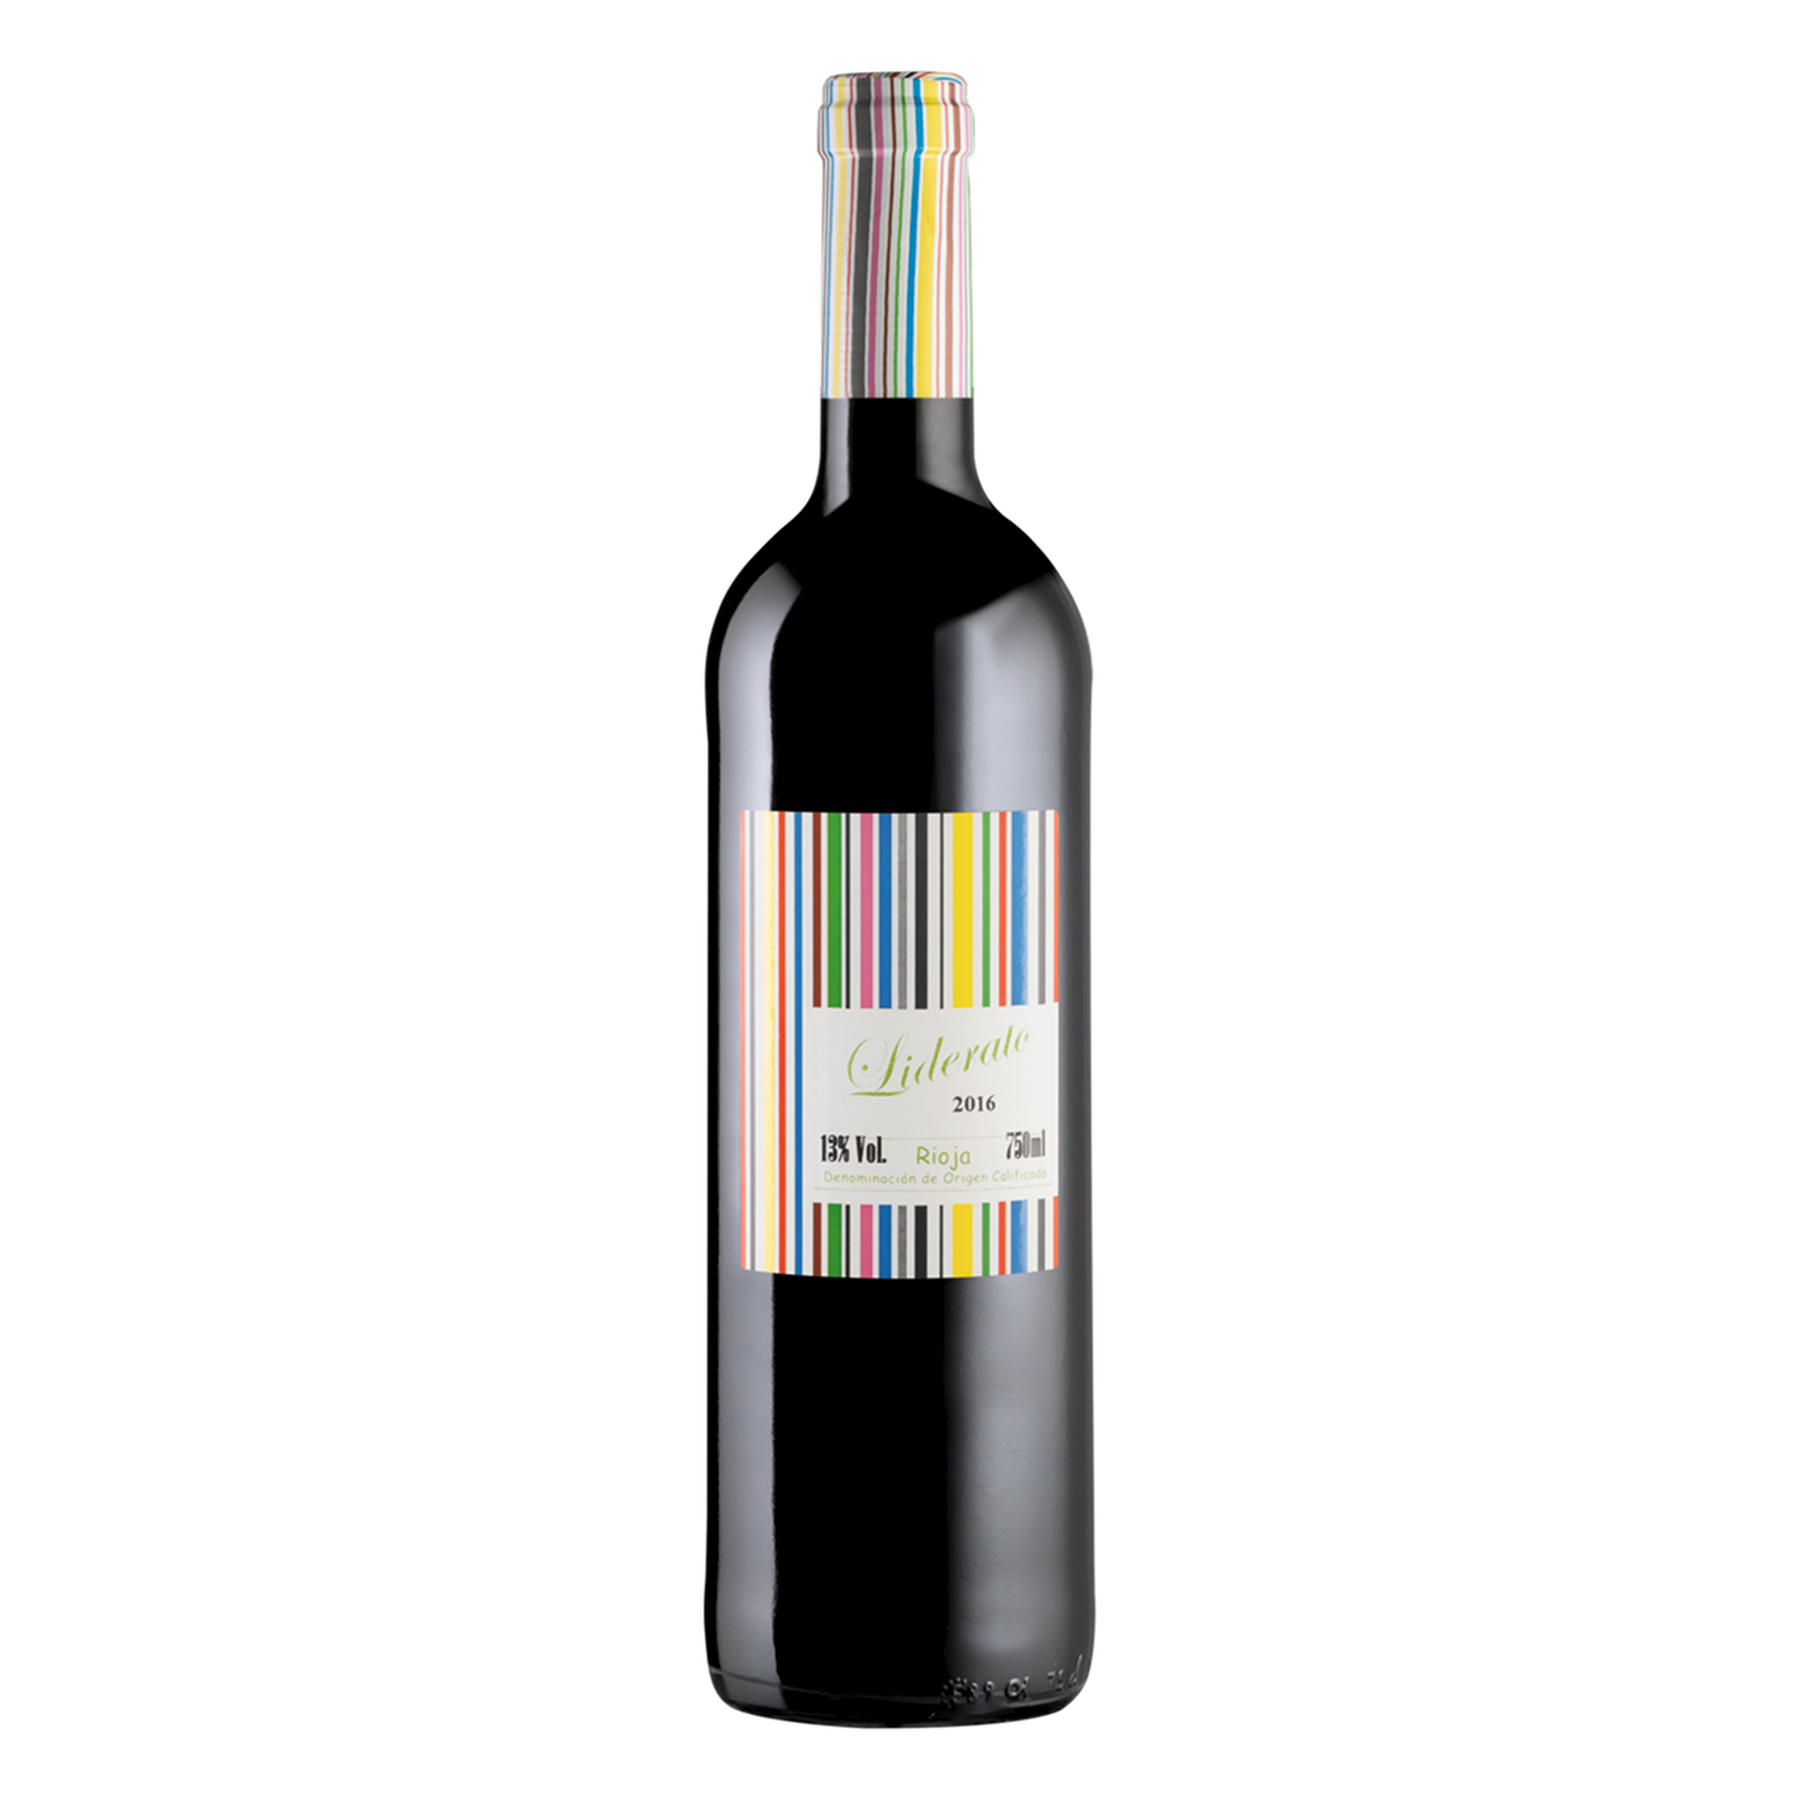 Vinho Tinto Cabernet Sauvignon 1791 Nederburg Garrafa 750ml